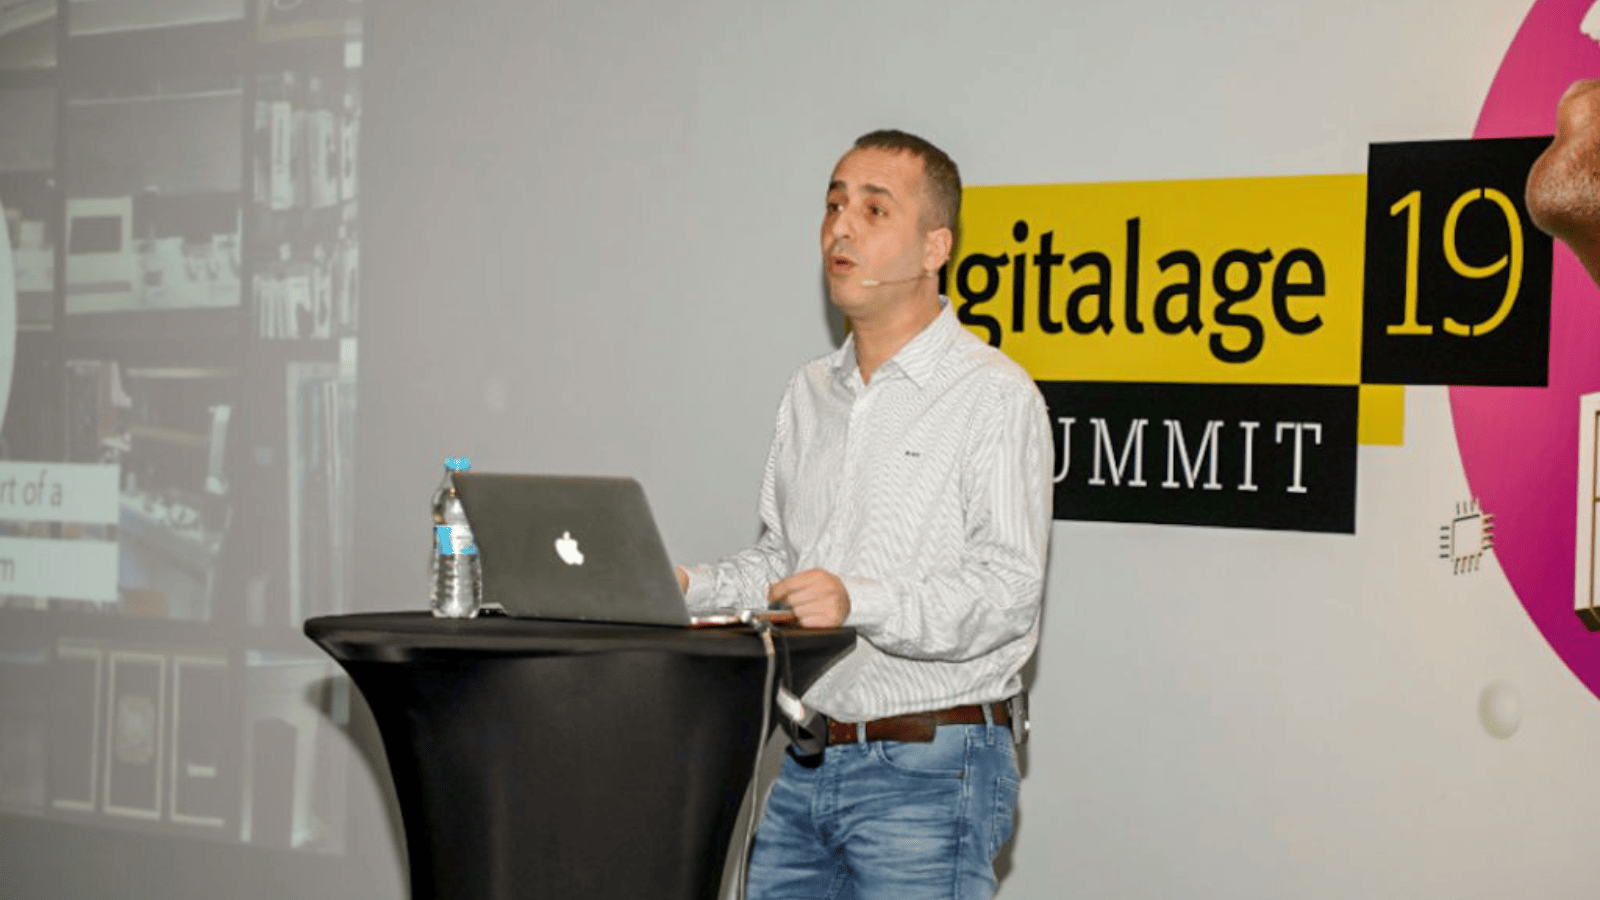 Chakib presenting at Digital Age Tech Summit in Istanbul.